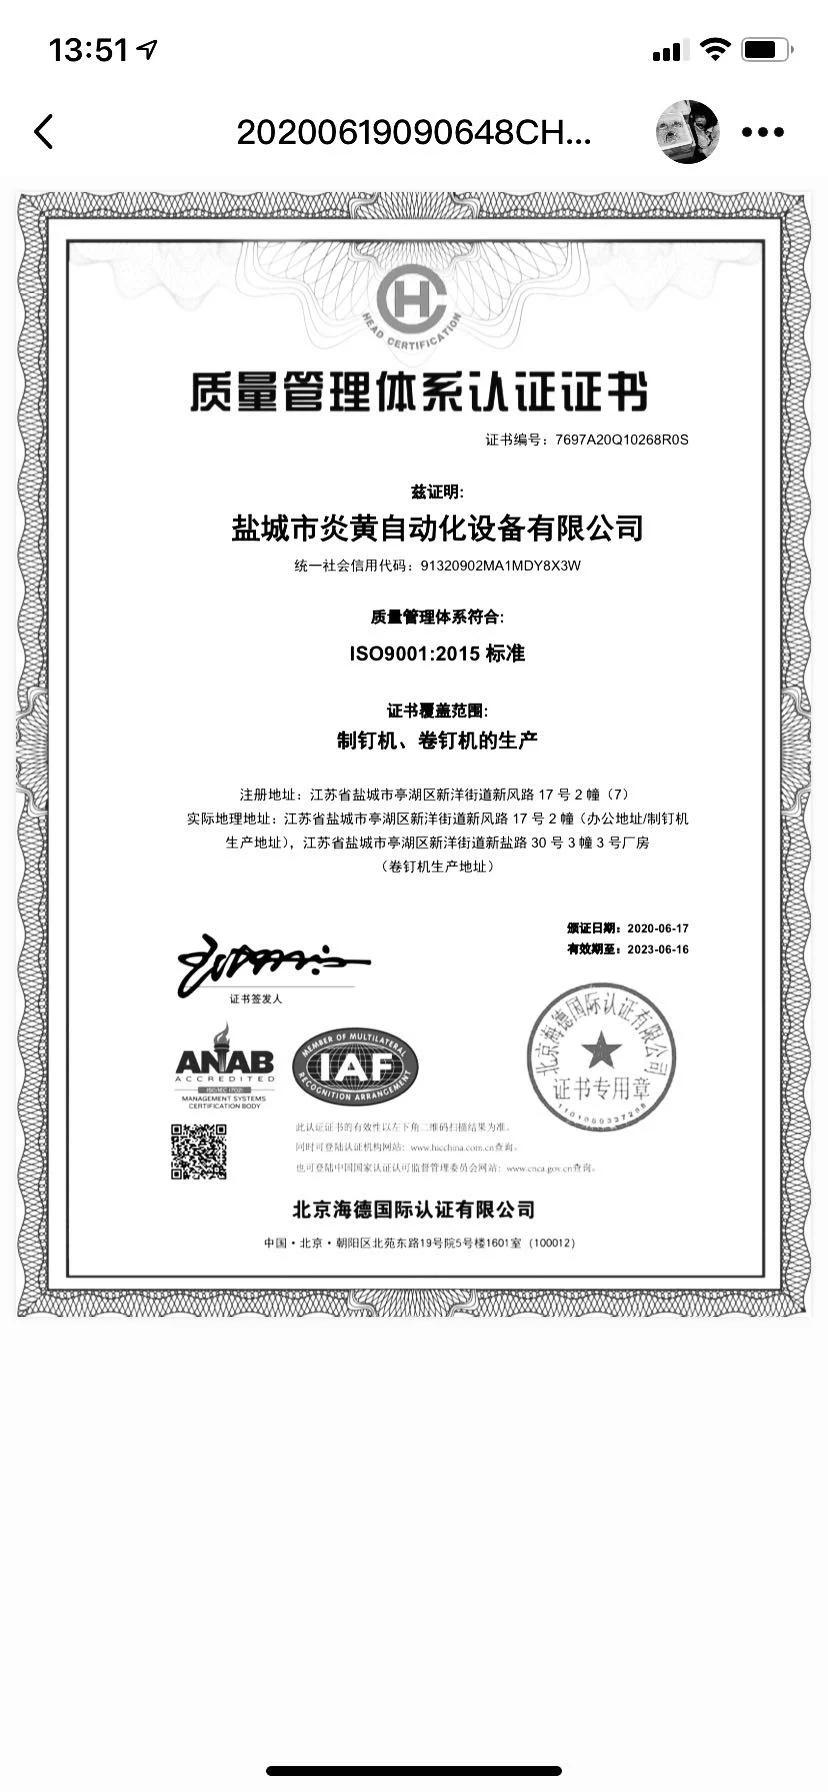 Hi Speed Steel/Iron Nail Making Machine X90 Is The Most Popular Nail Machine in China